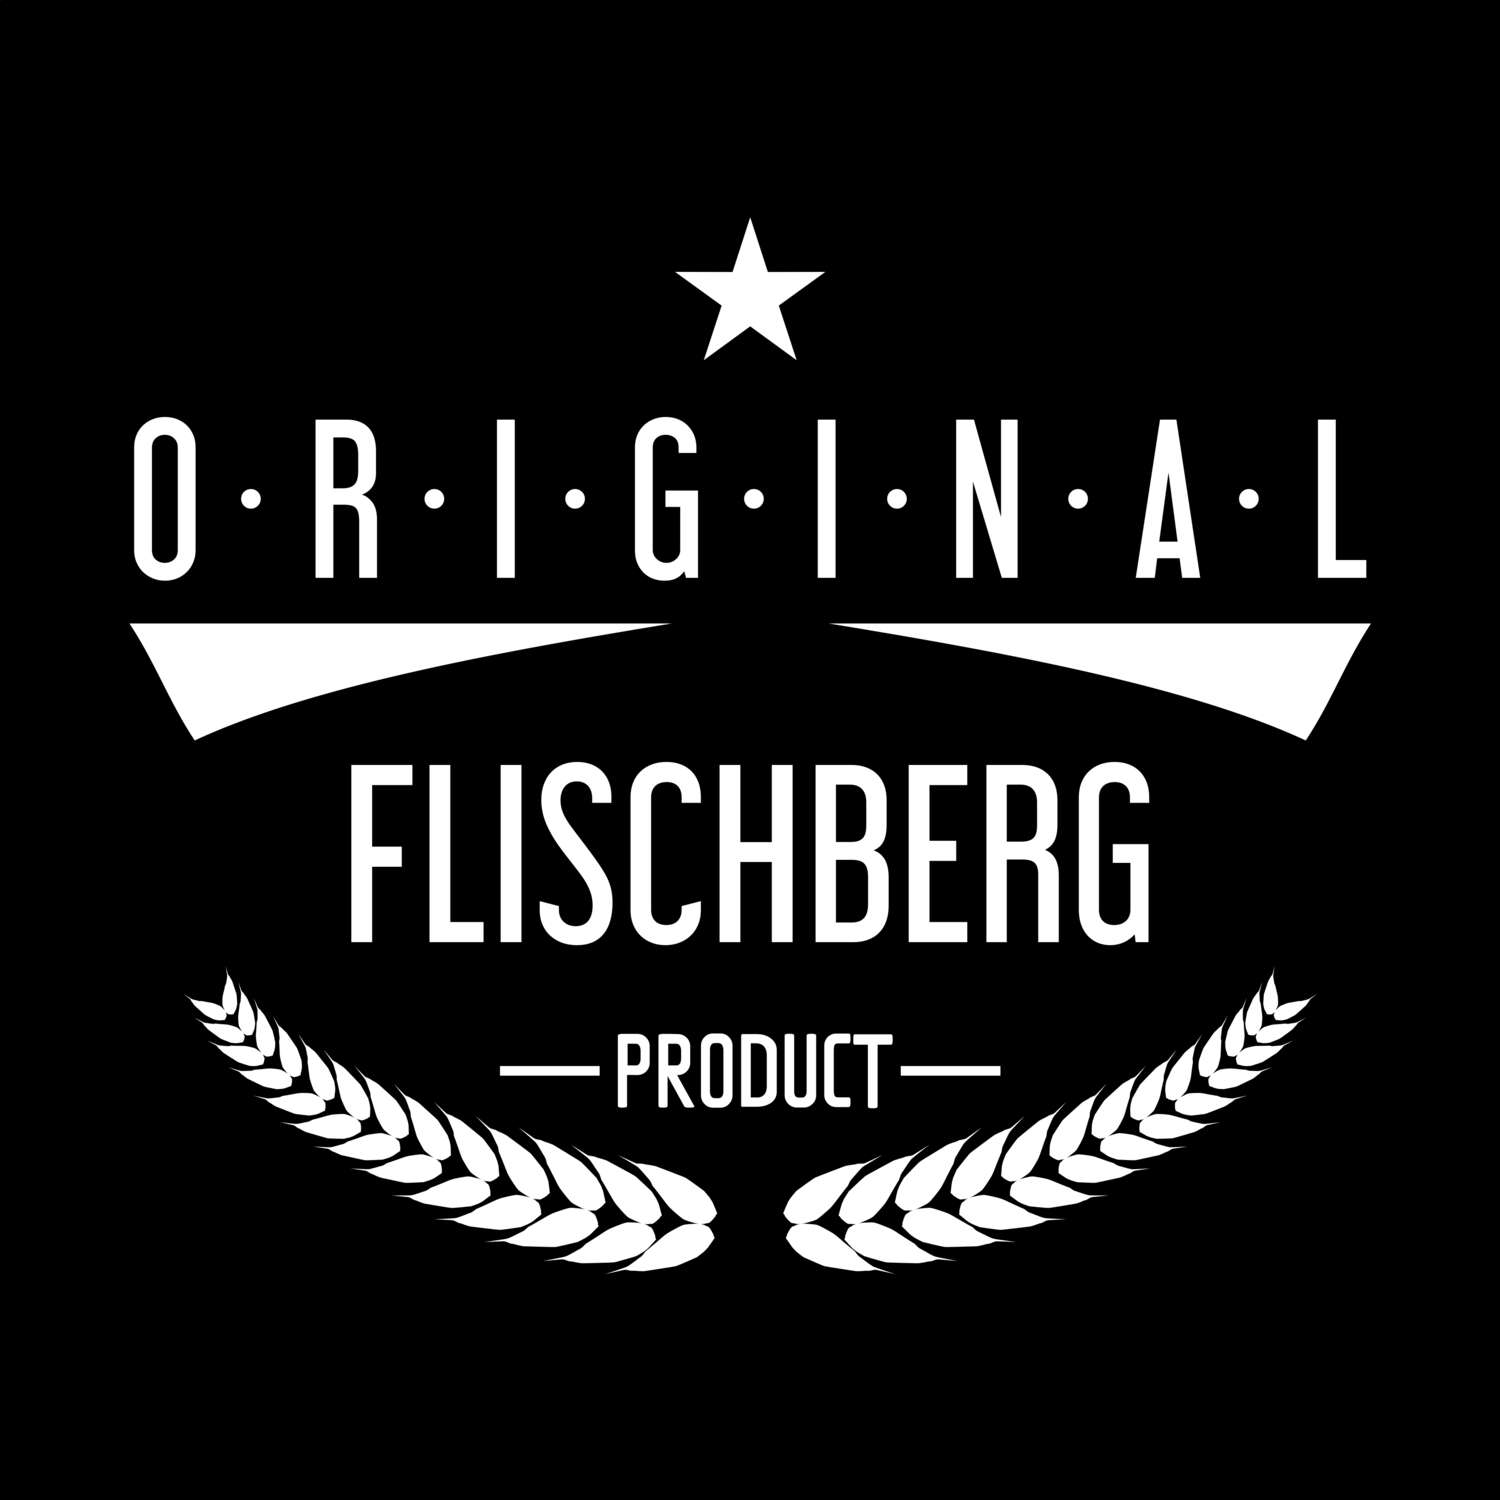 Flischberg T-Shirt »Original Product«